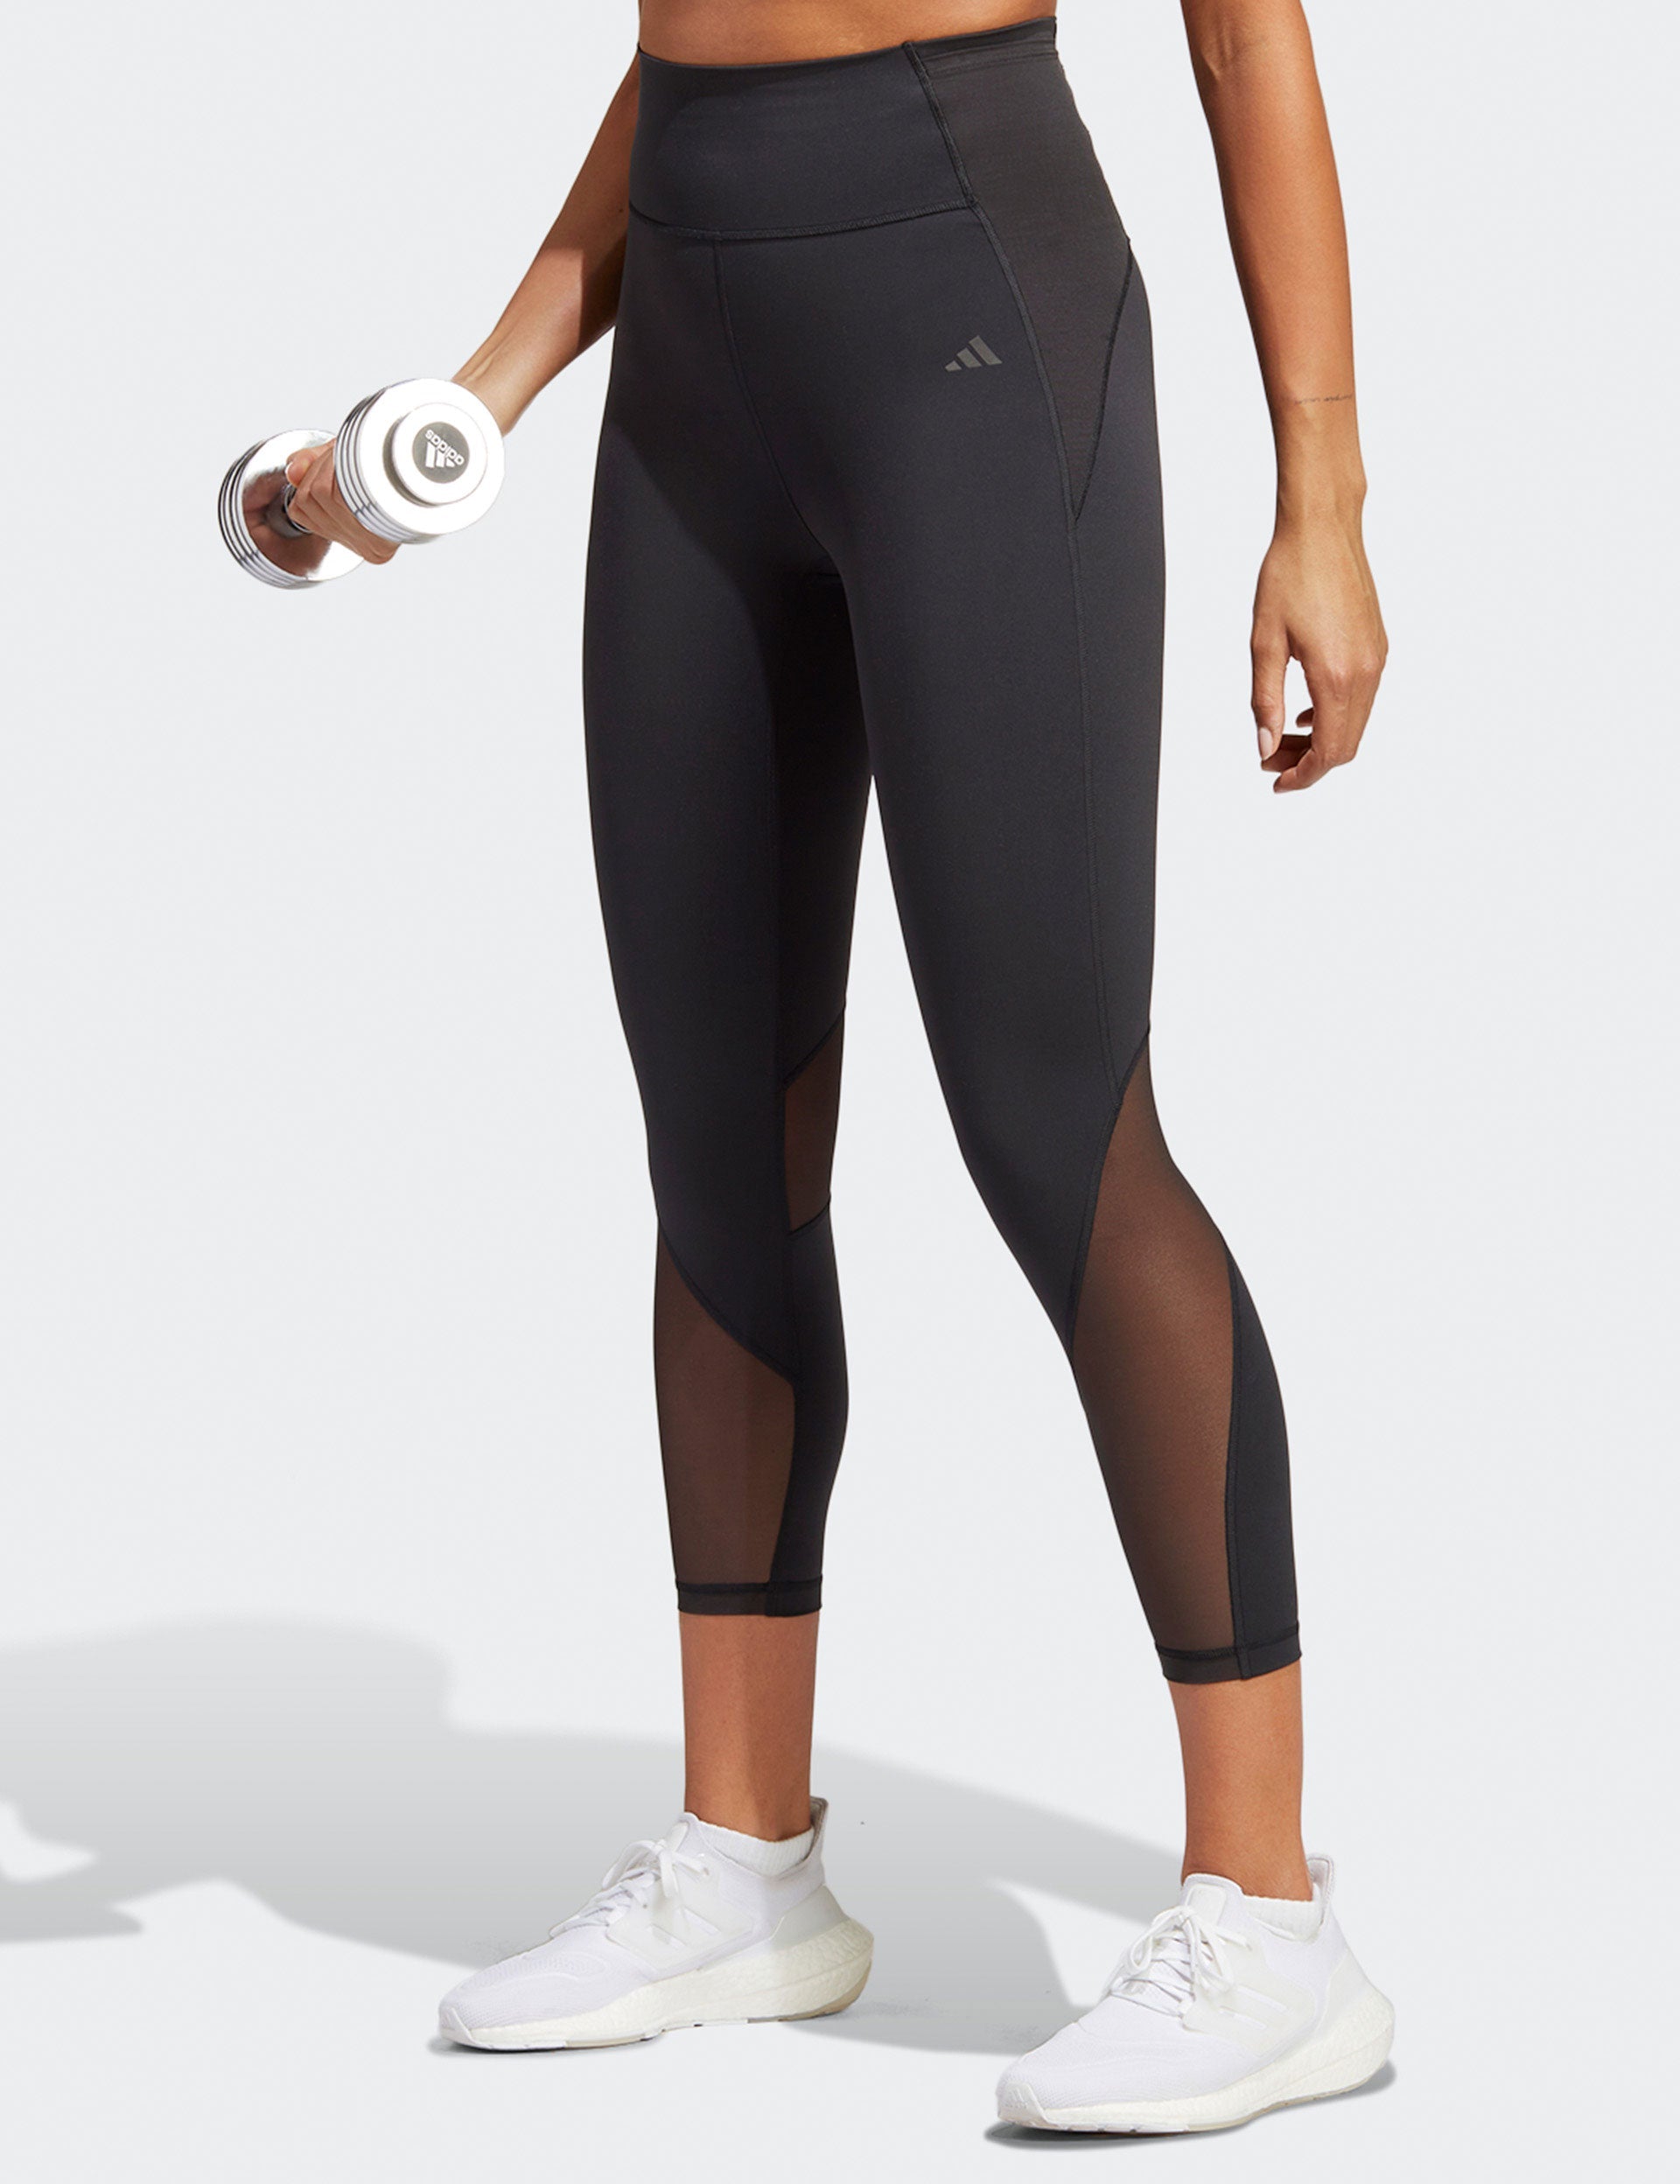 adidas Believe This 2.0 Power 7/8 Leggings - Women's Training